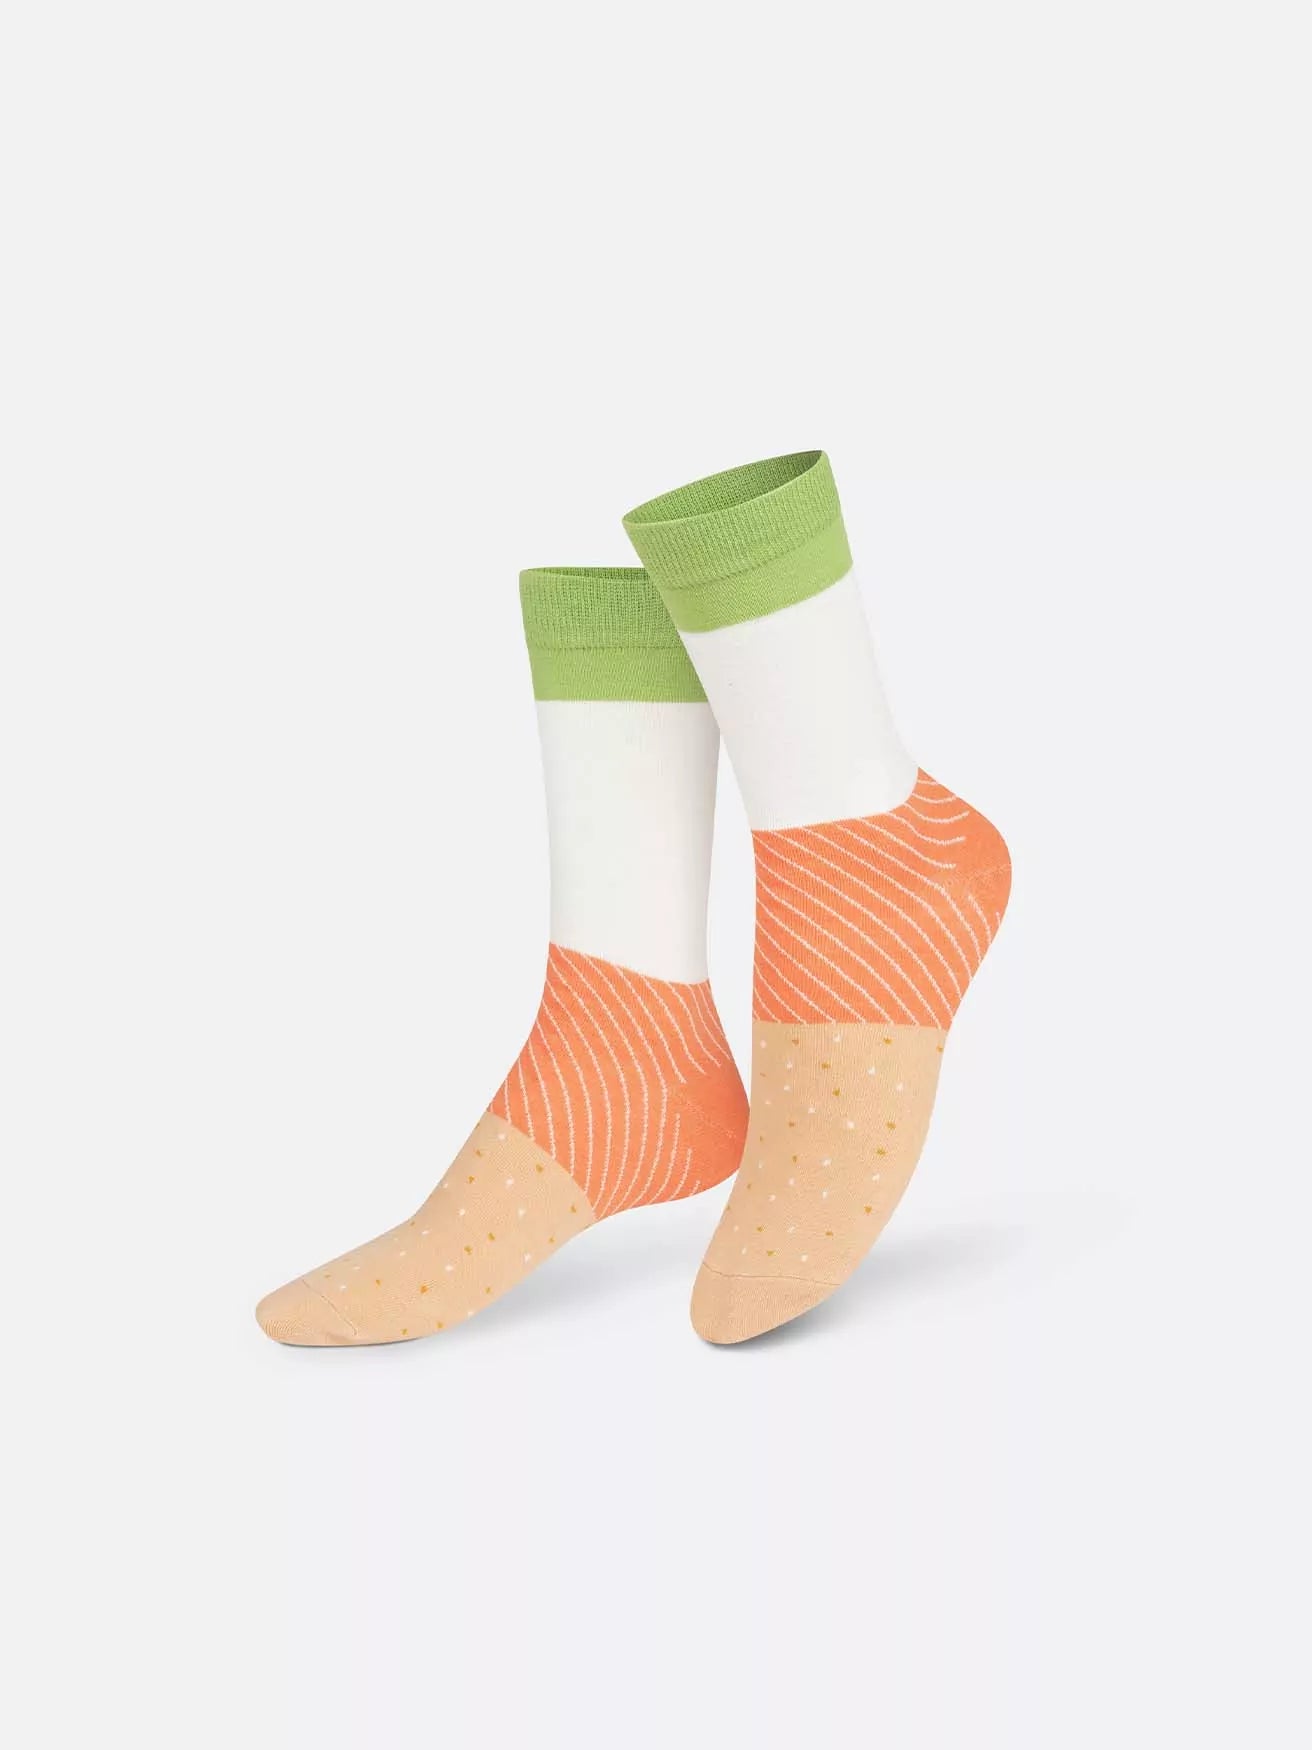 
                  
                    Salmon Bagel Socks
                  
                